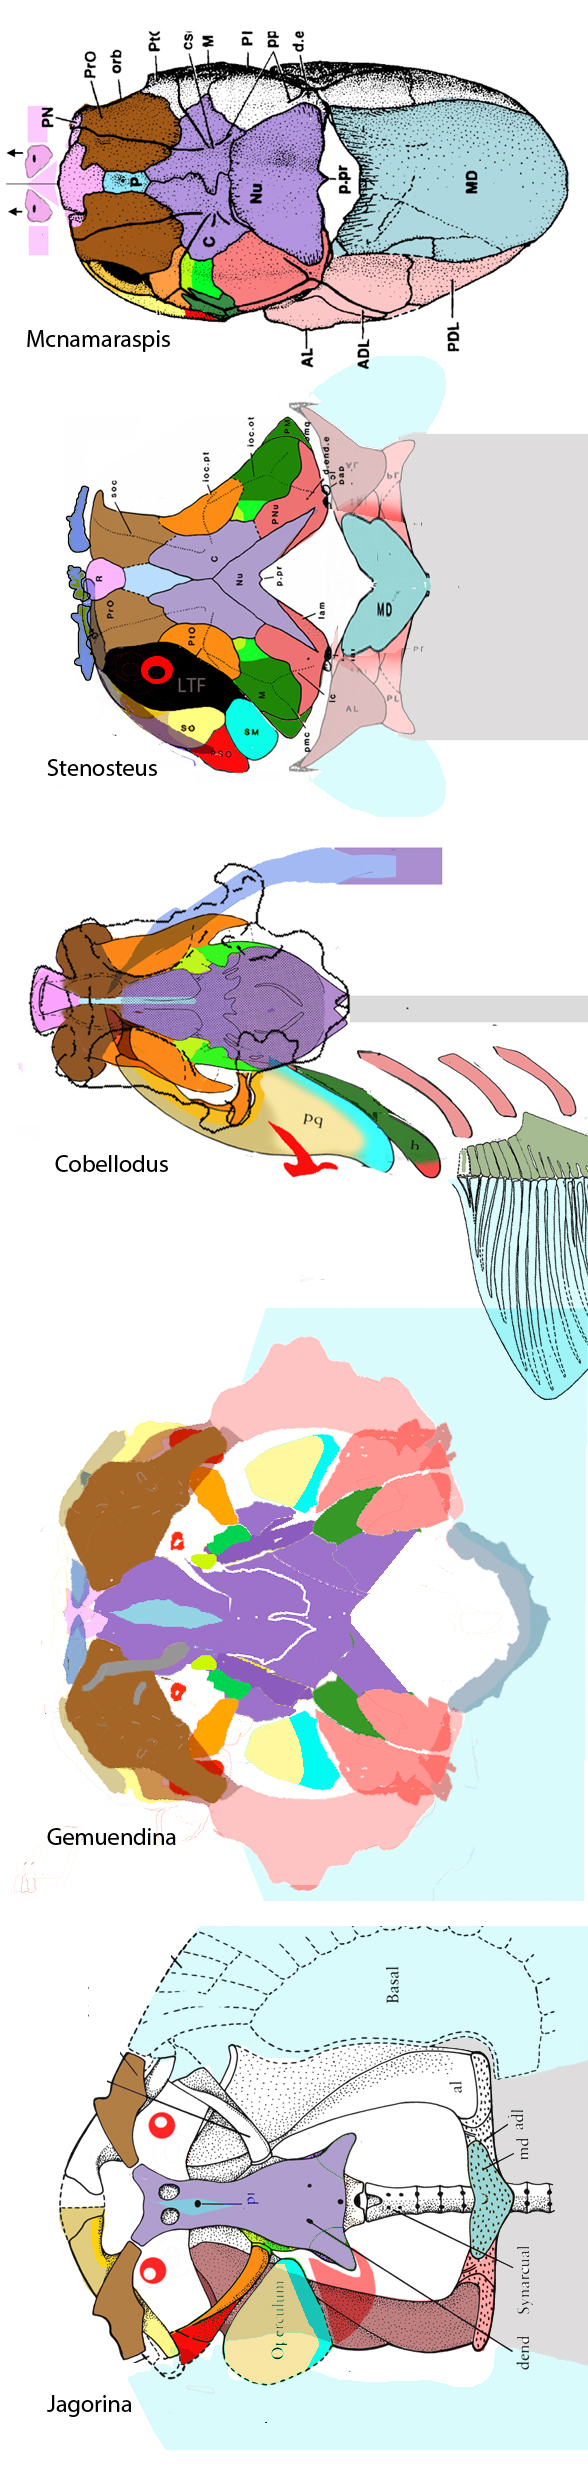 Stenosteus-Gemuendina-Jogorina skulls compared